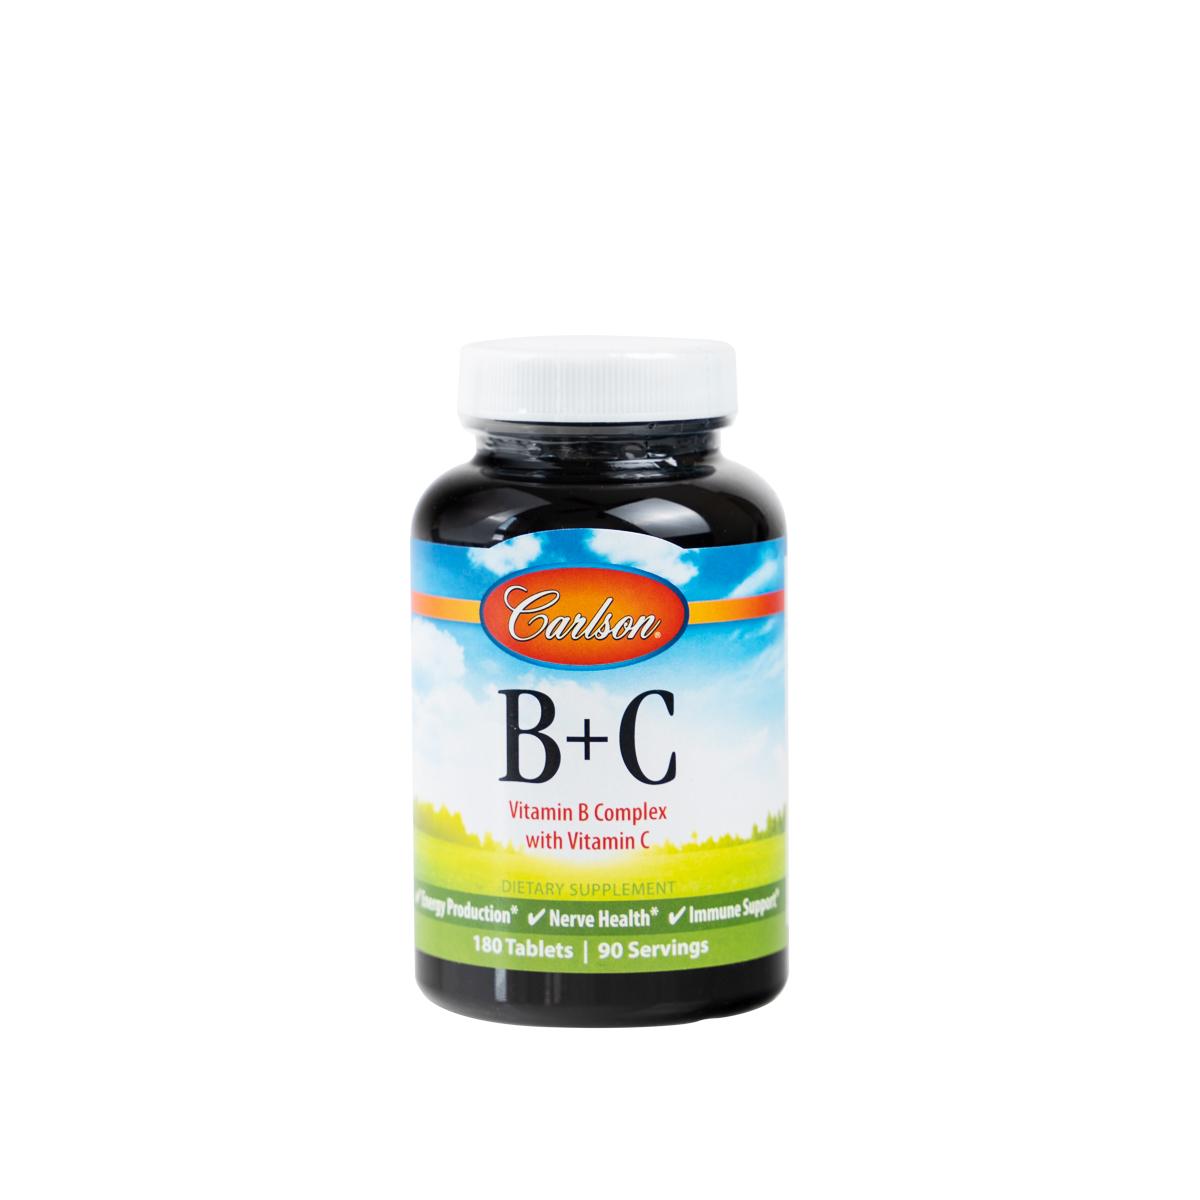 Primary image of B+C Vitamin